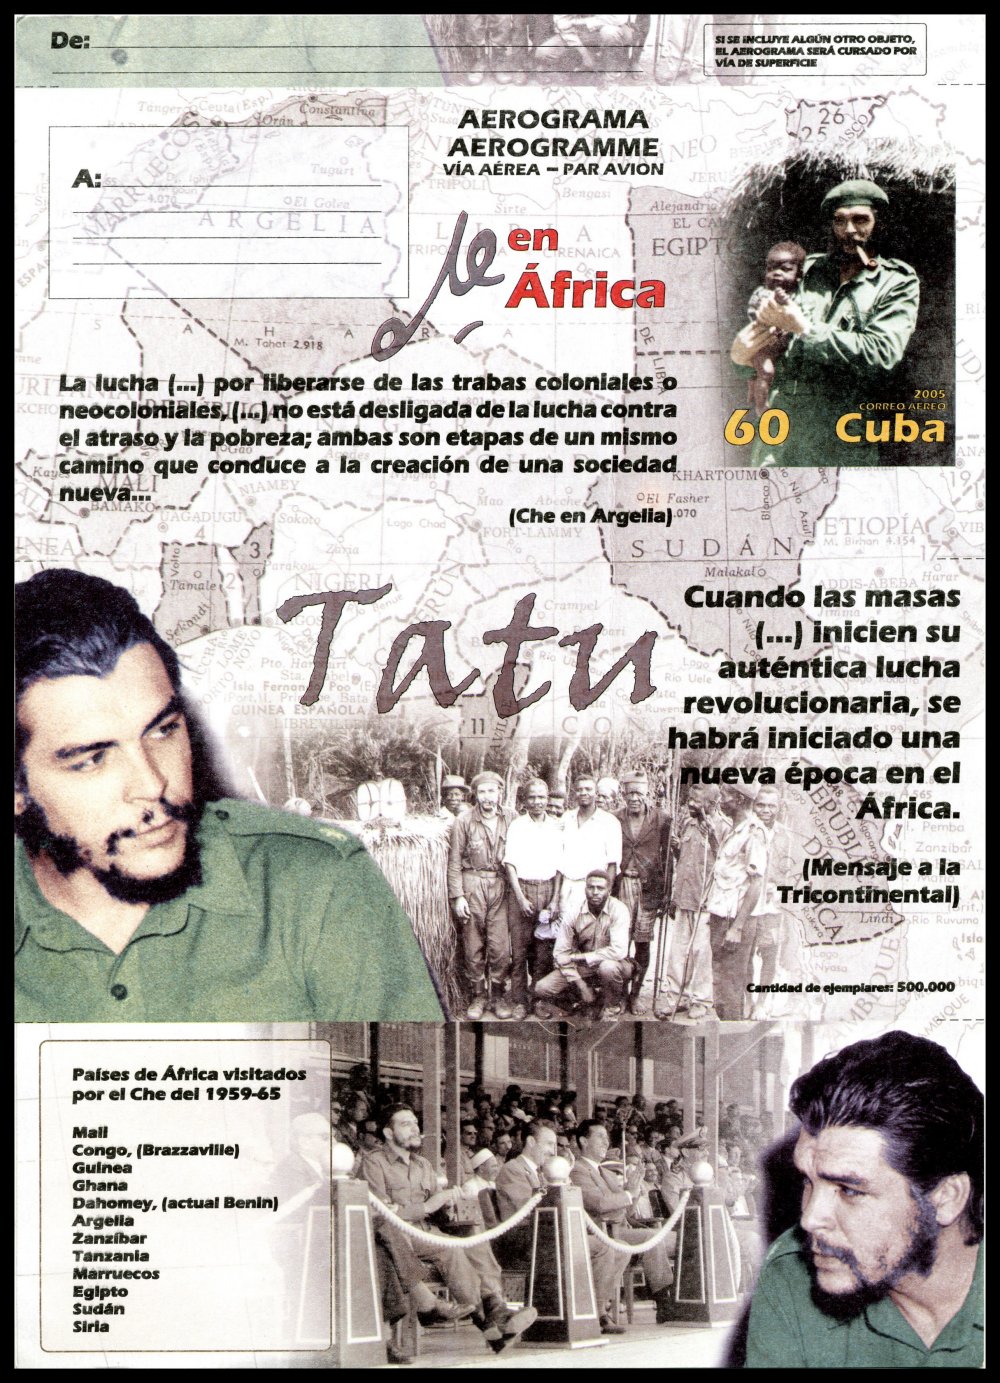 2005 - Che in Africa Aerogram